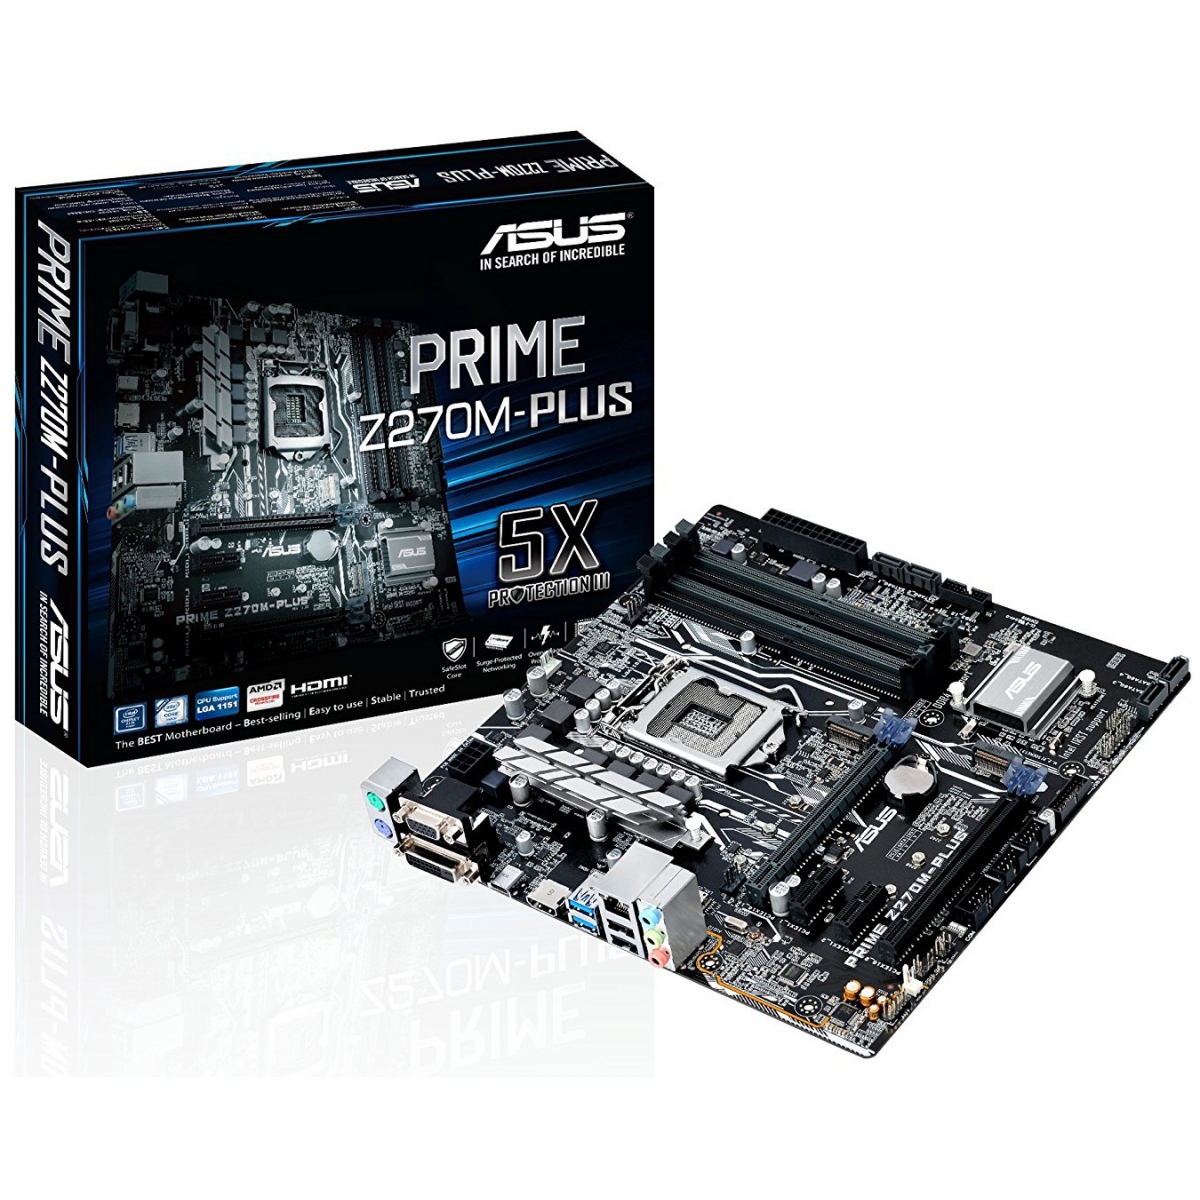 Placa Mãe Asus Prime Z270M-PLUS/BR, Chipset Z270, Intel LGA 1151, mATX, DDR4